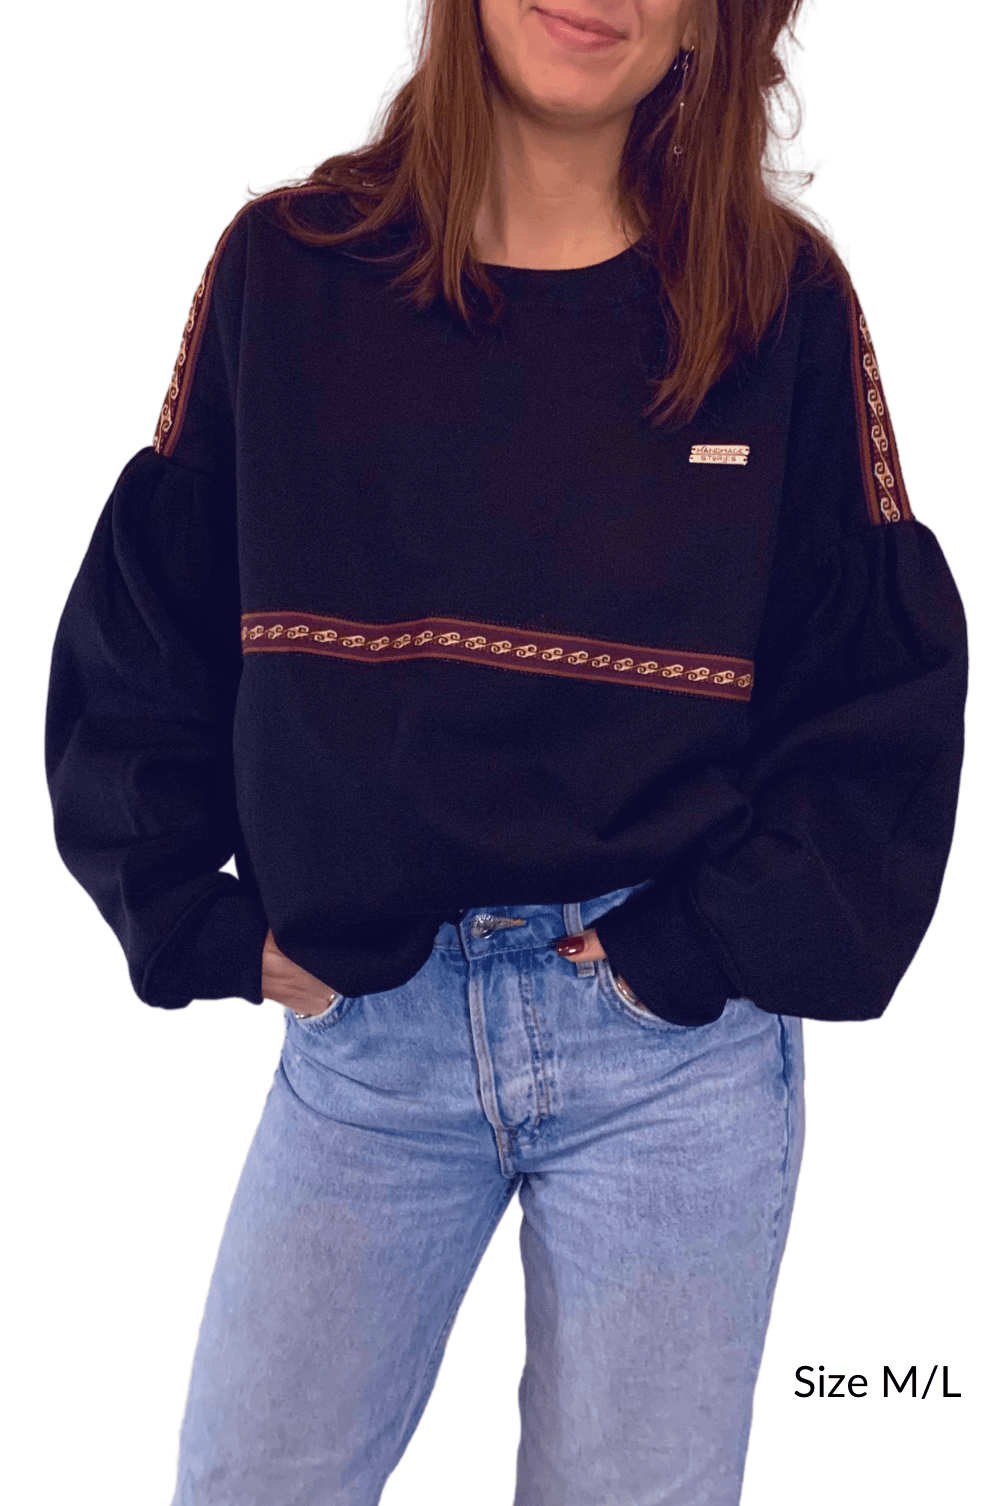 Black oversized sweatshirt with Peruvian motifs